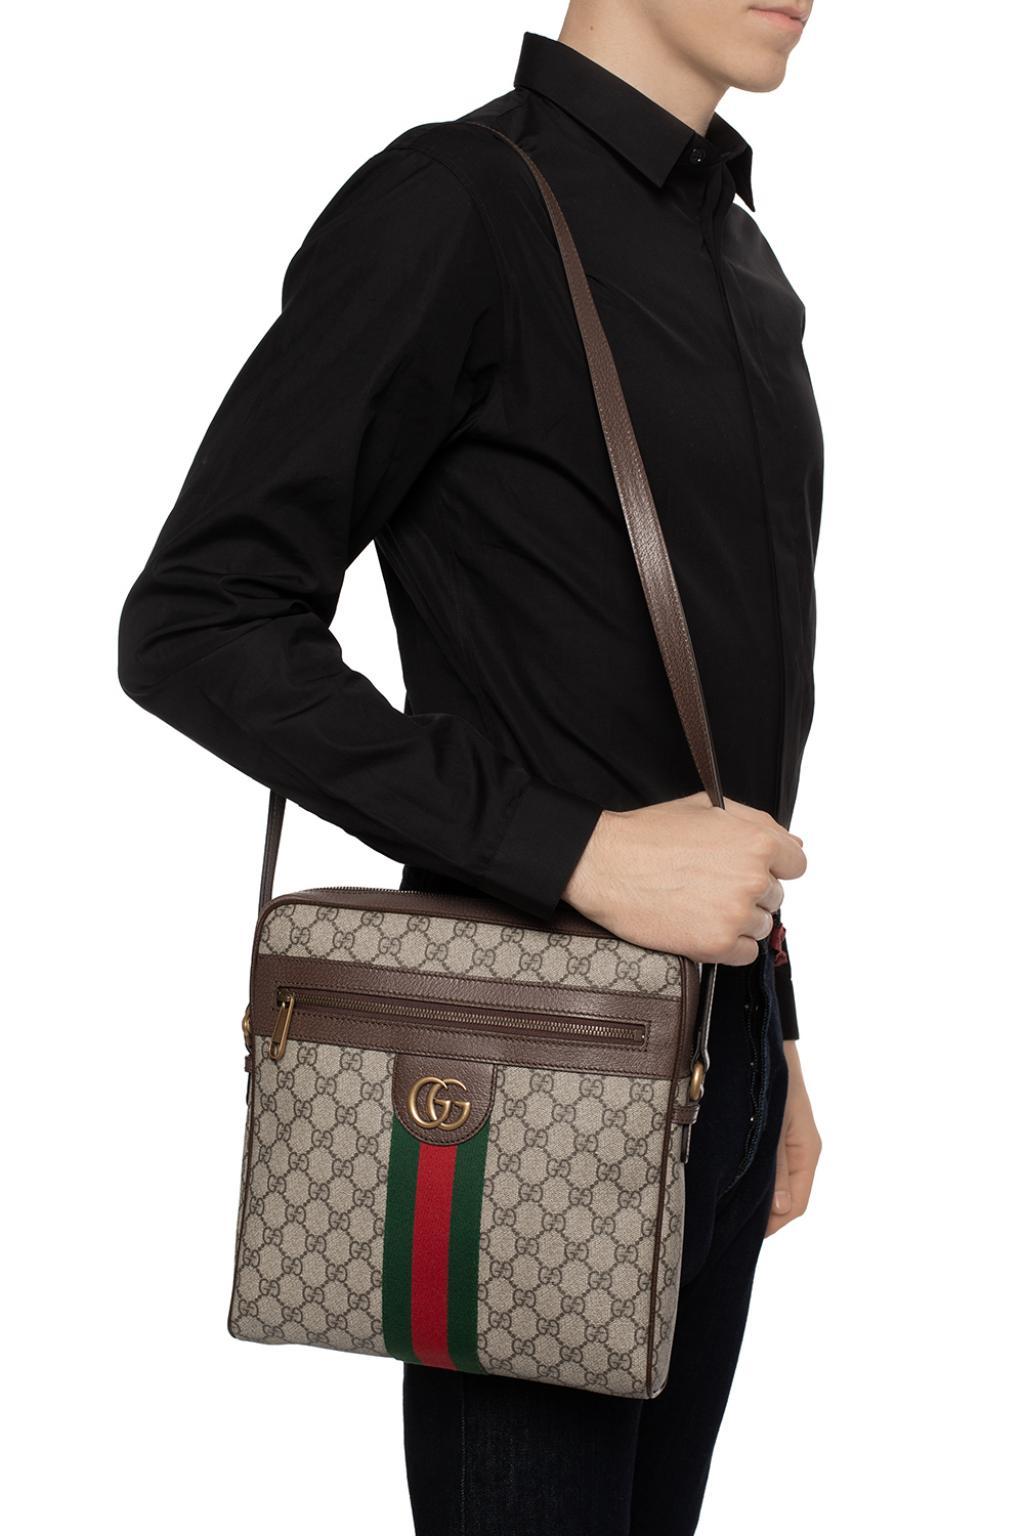 Gucci Ophidia Messenger Bag - Farfetch